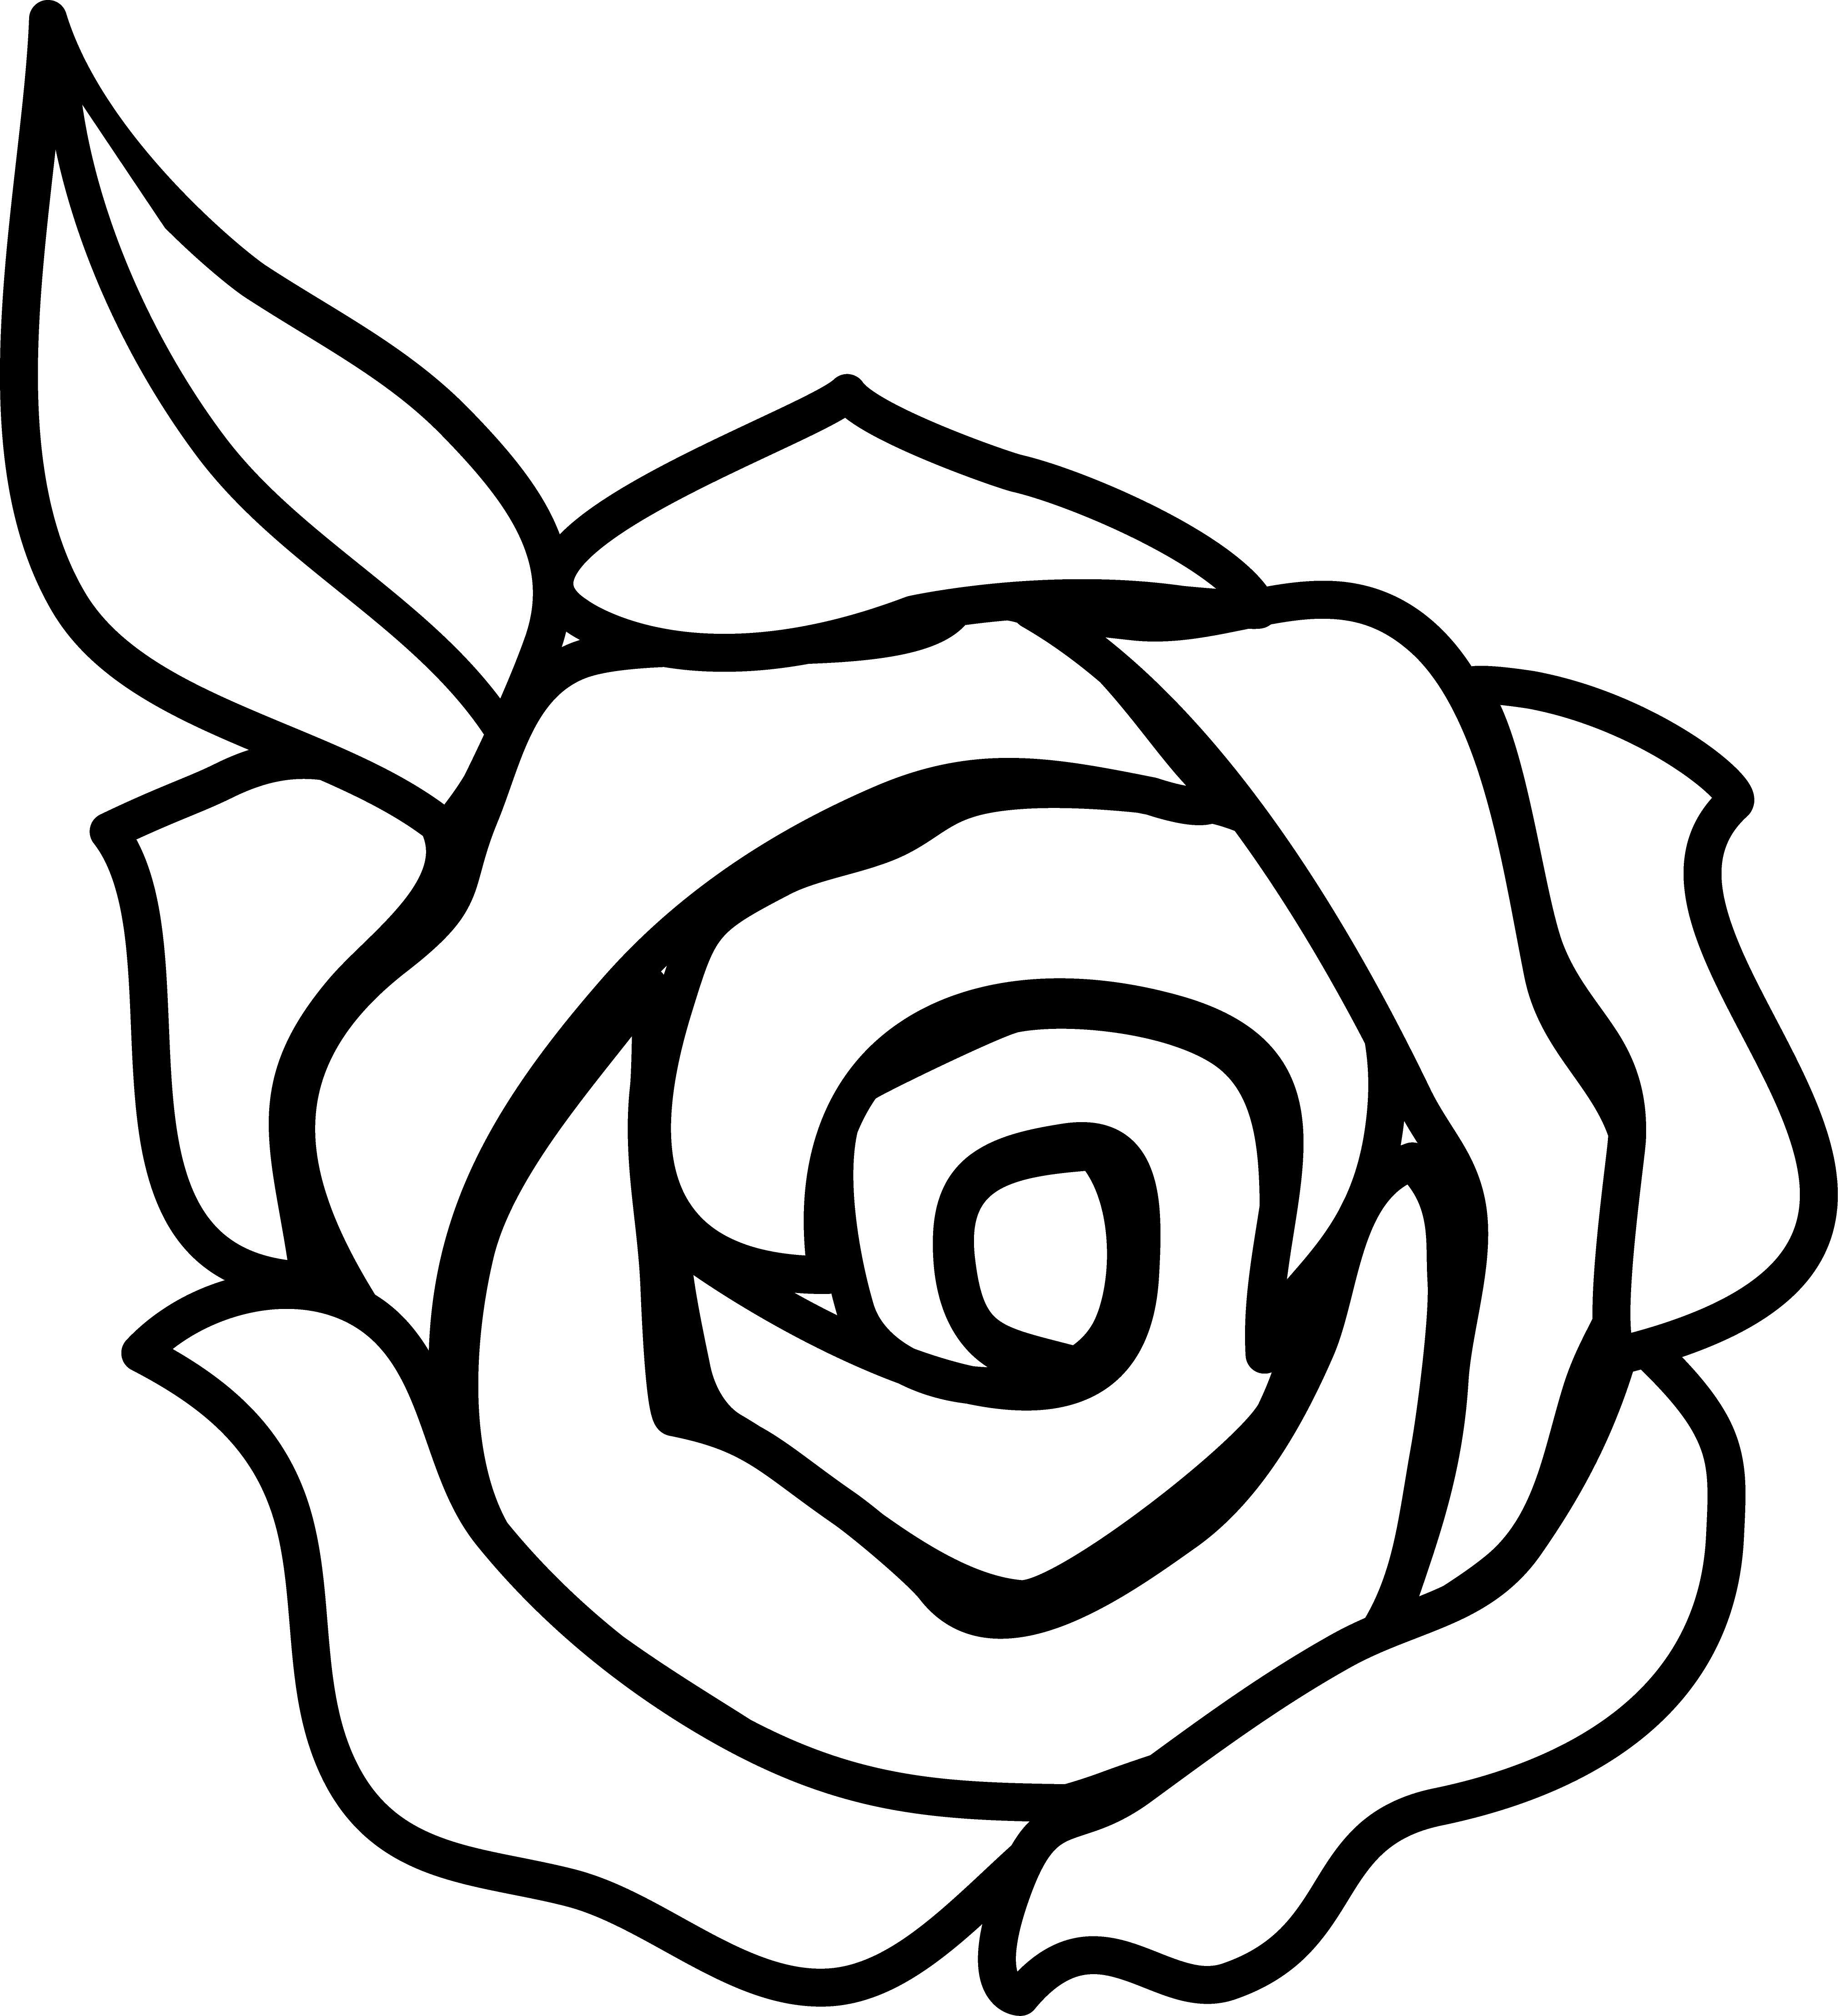 Black And White Rose Border Clip Art - Free ...